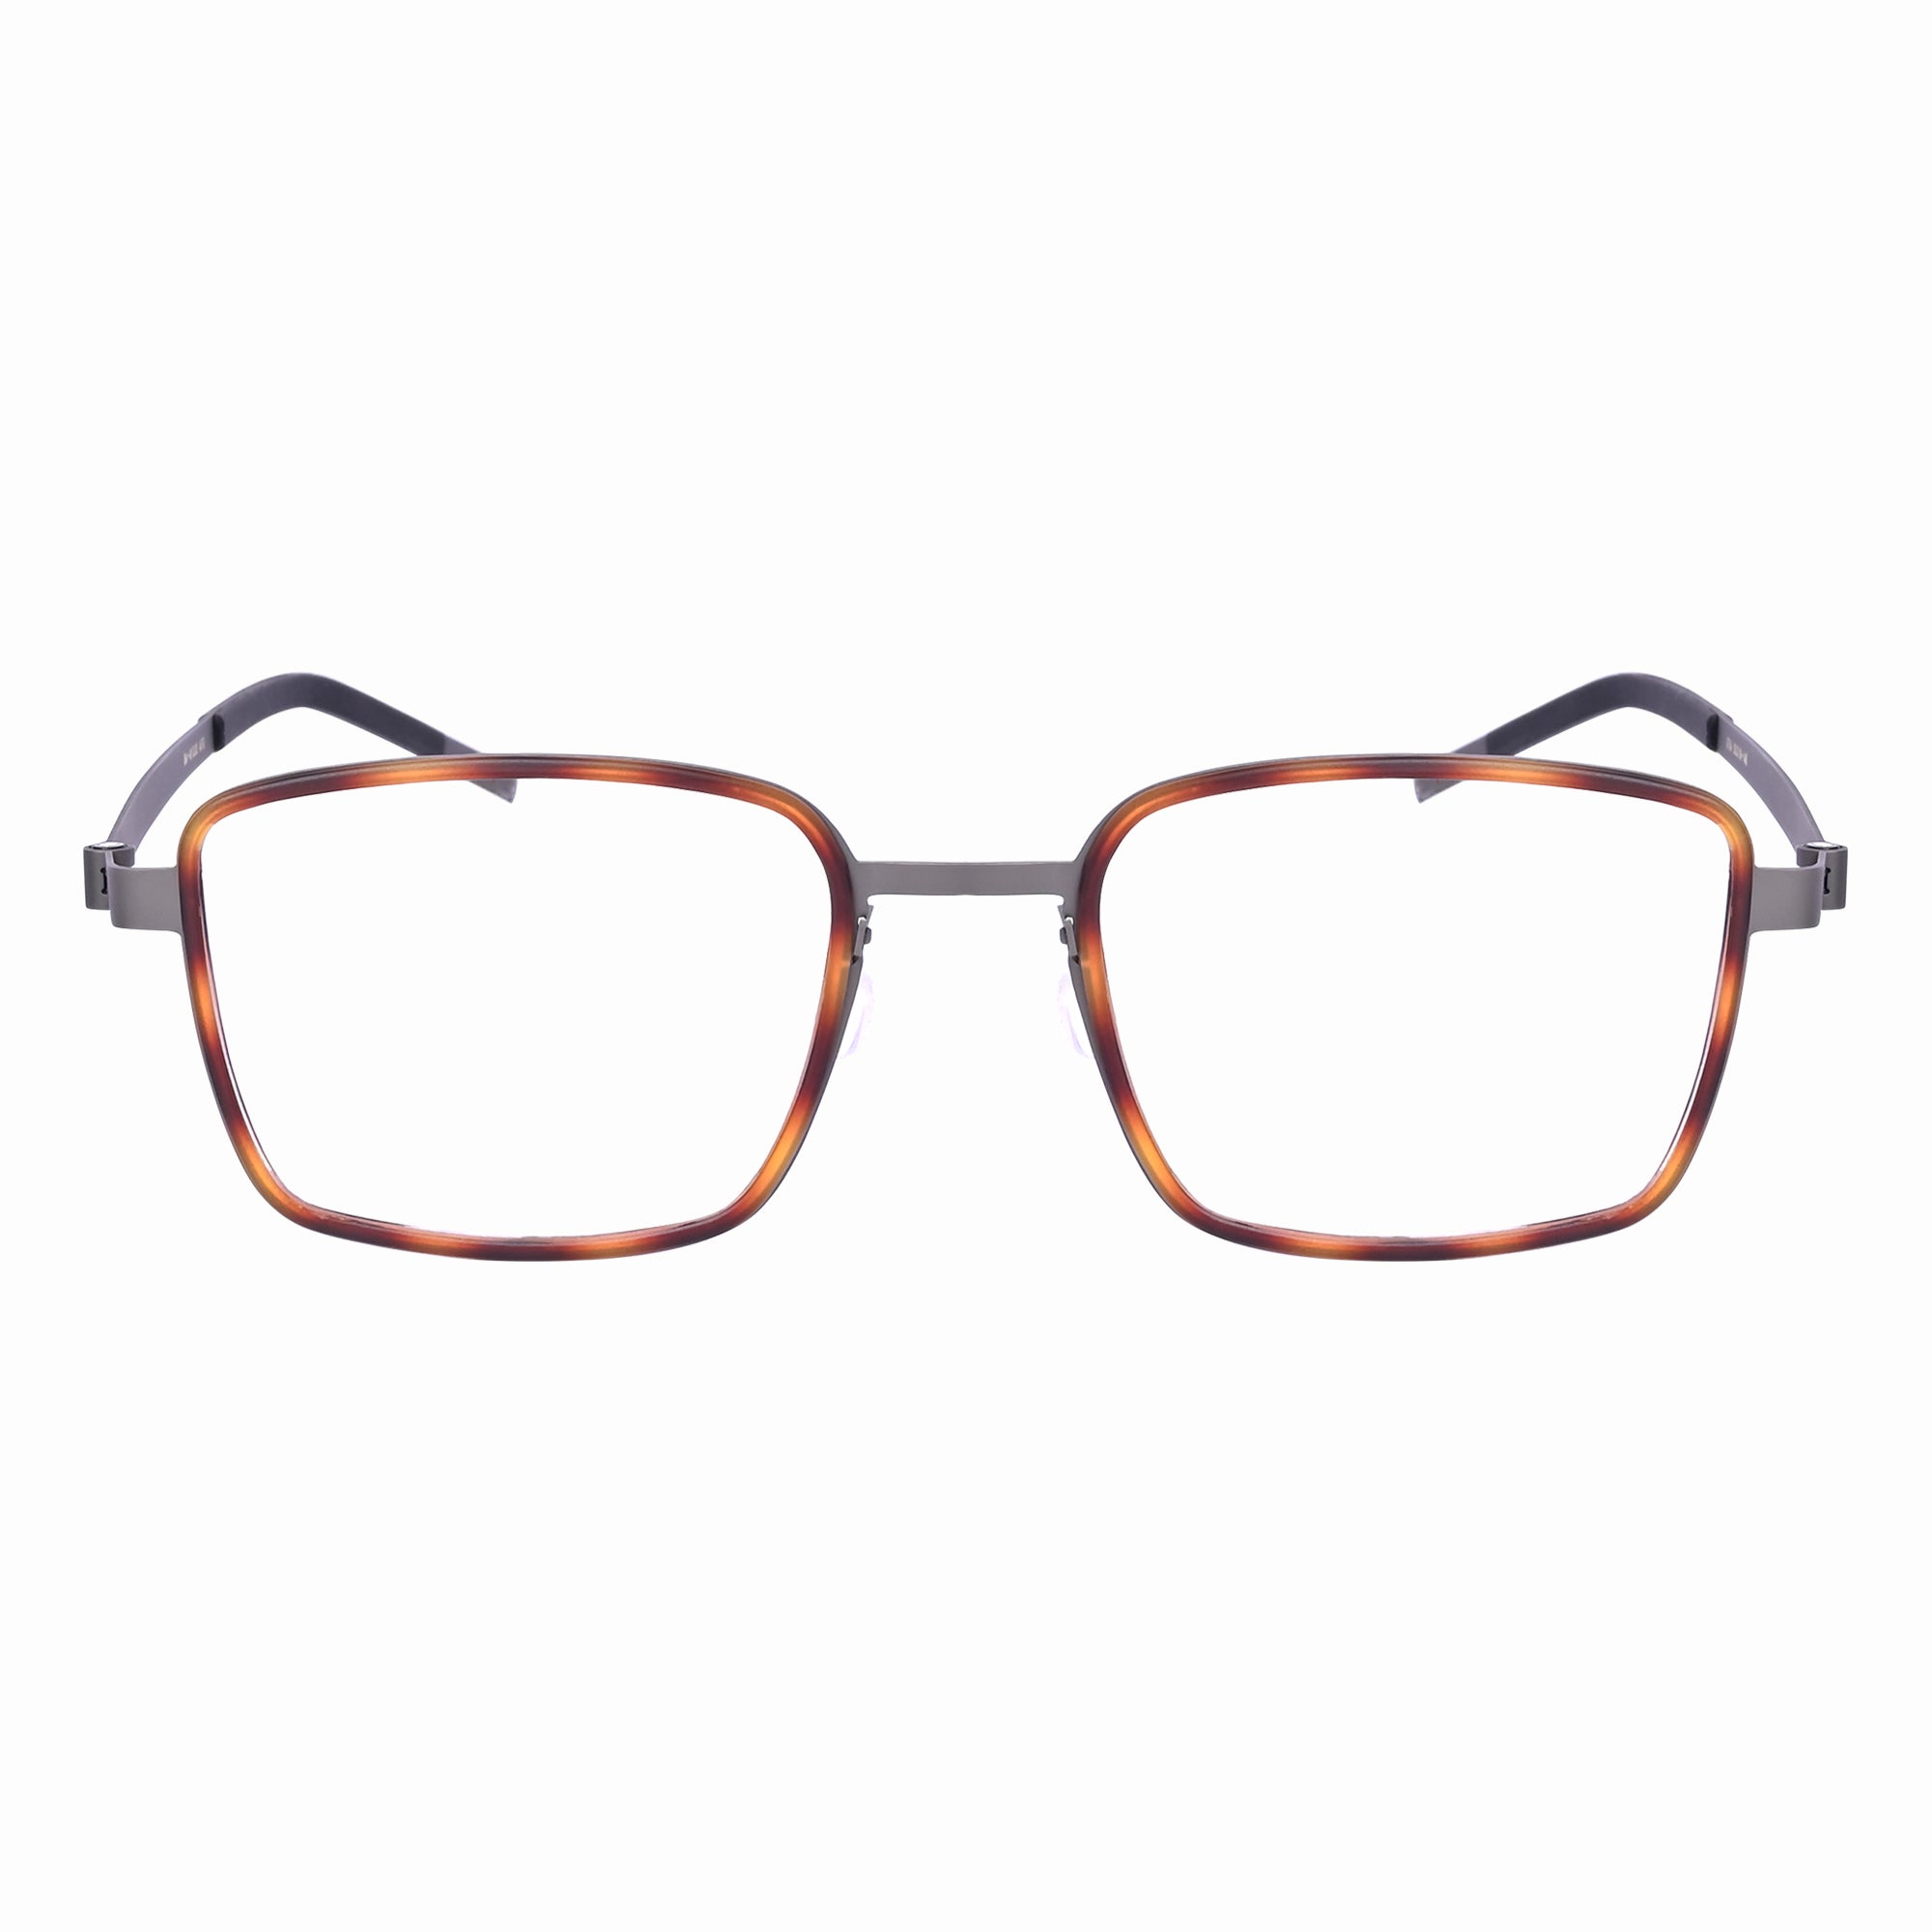 Grey Tortoise Square Keymount Titanium Glasses - LG-007 GRTT